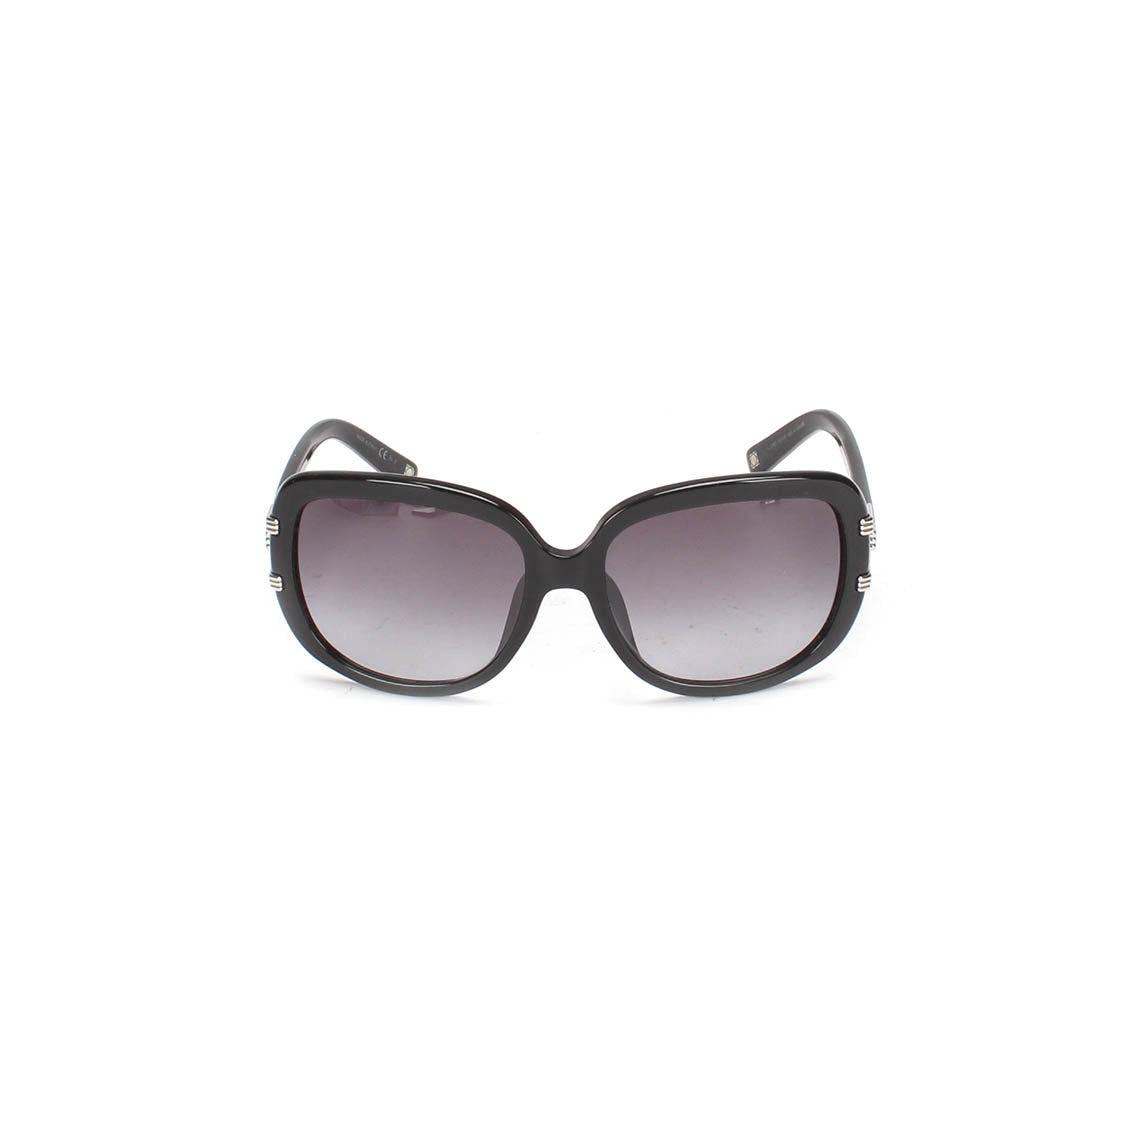 DiorGraphix Tinted Sunglasses 3F